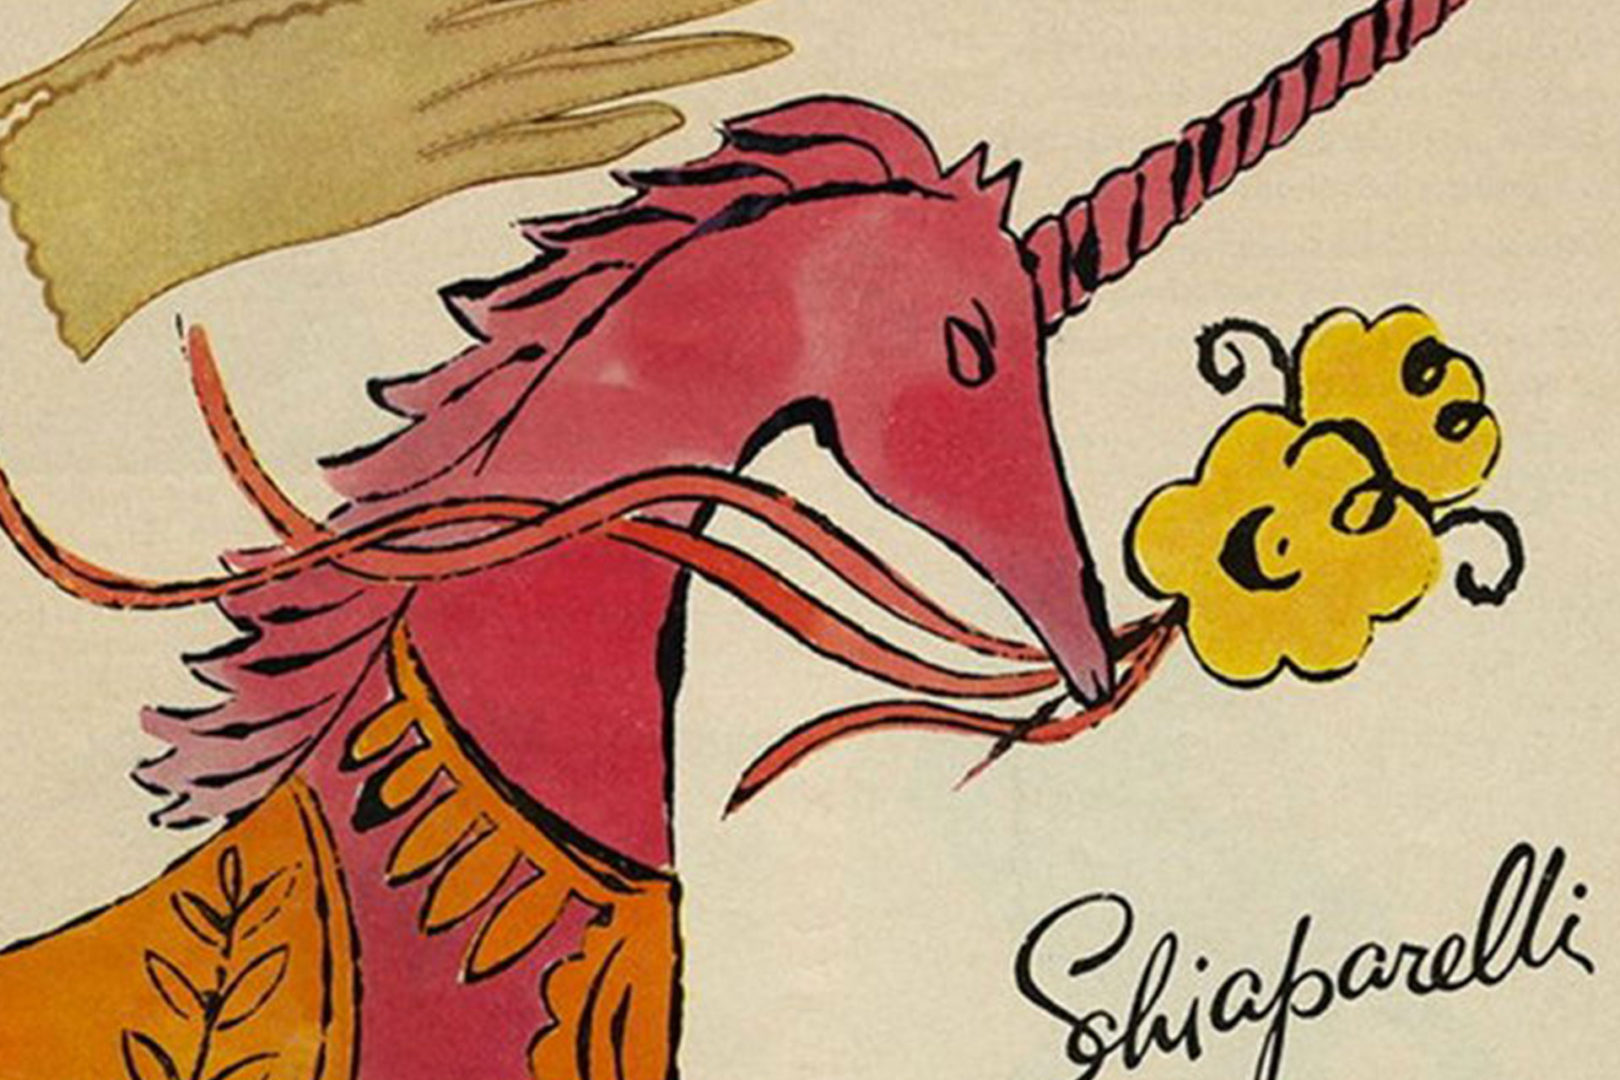 Lampoon, Schiaparelli, Andy Warhol illustration